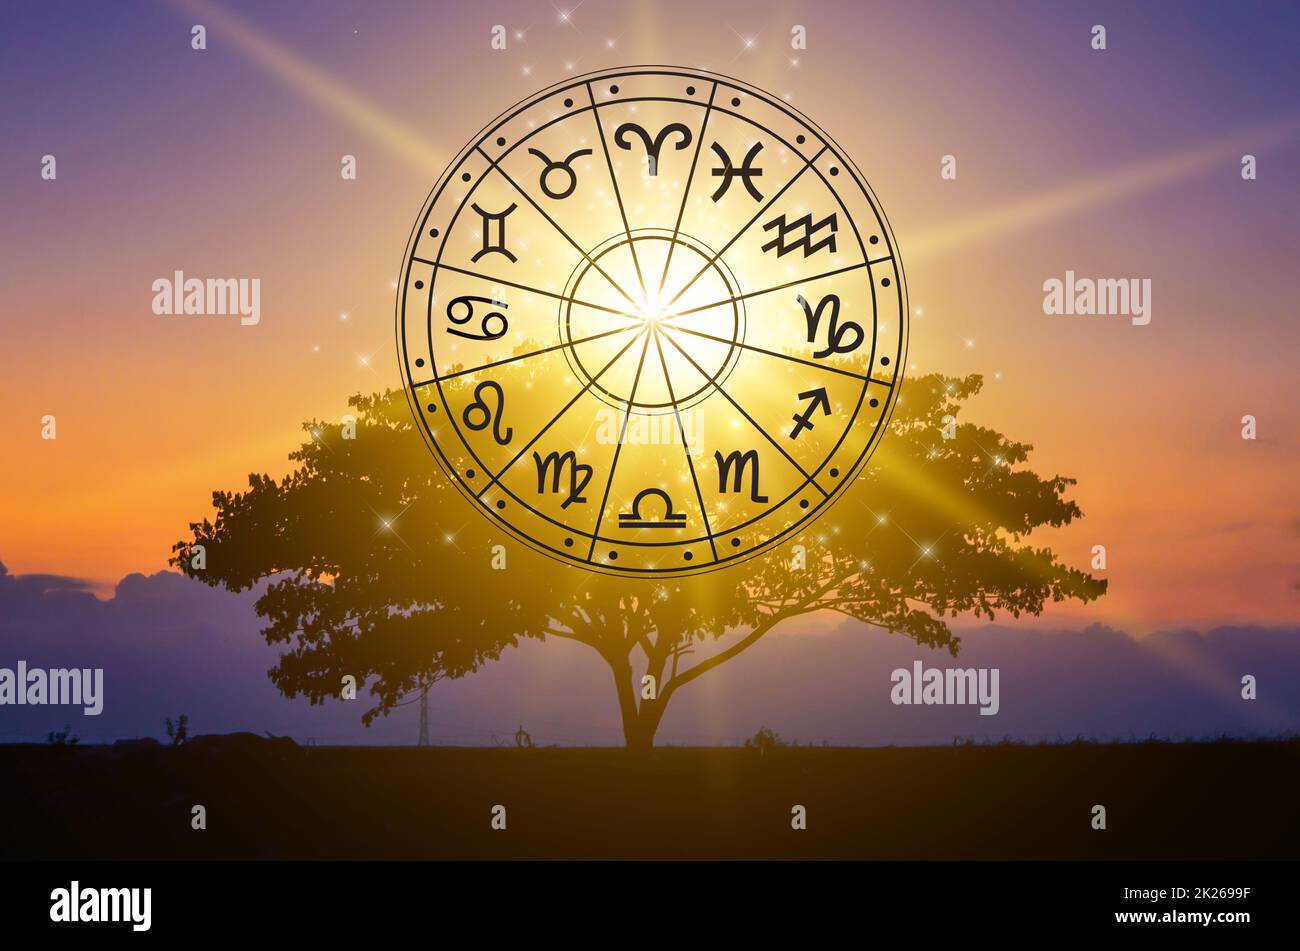 Zodiac signs inside of horoscope circle astrology and horoscopes concept Stock Photo